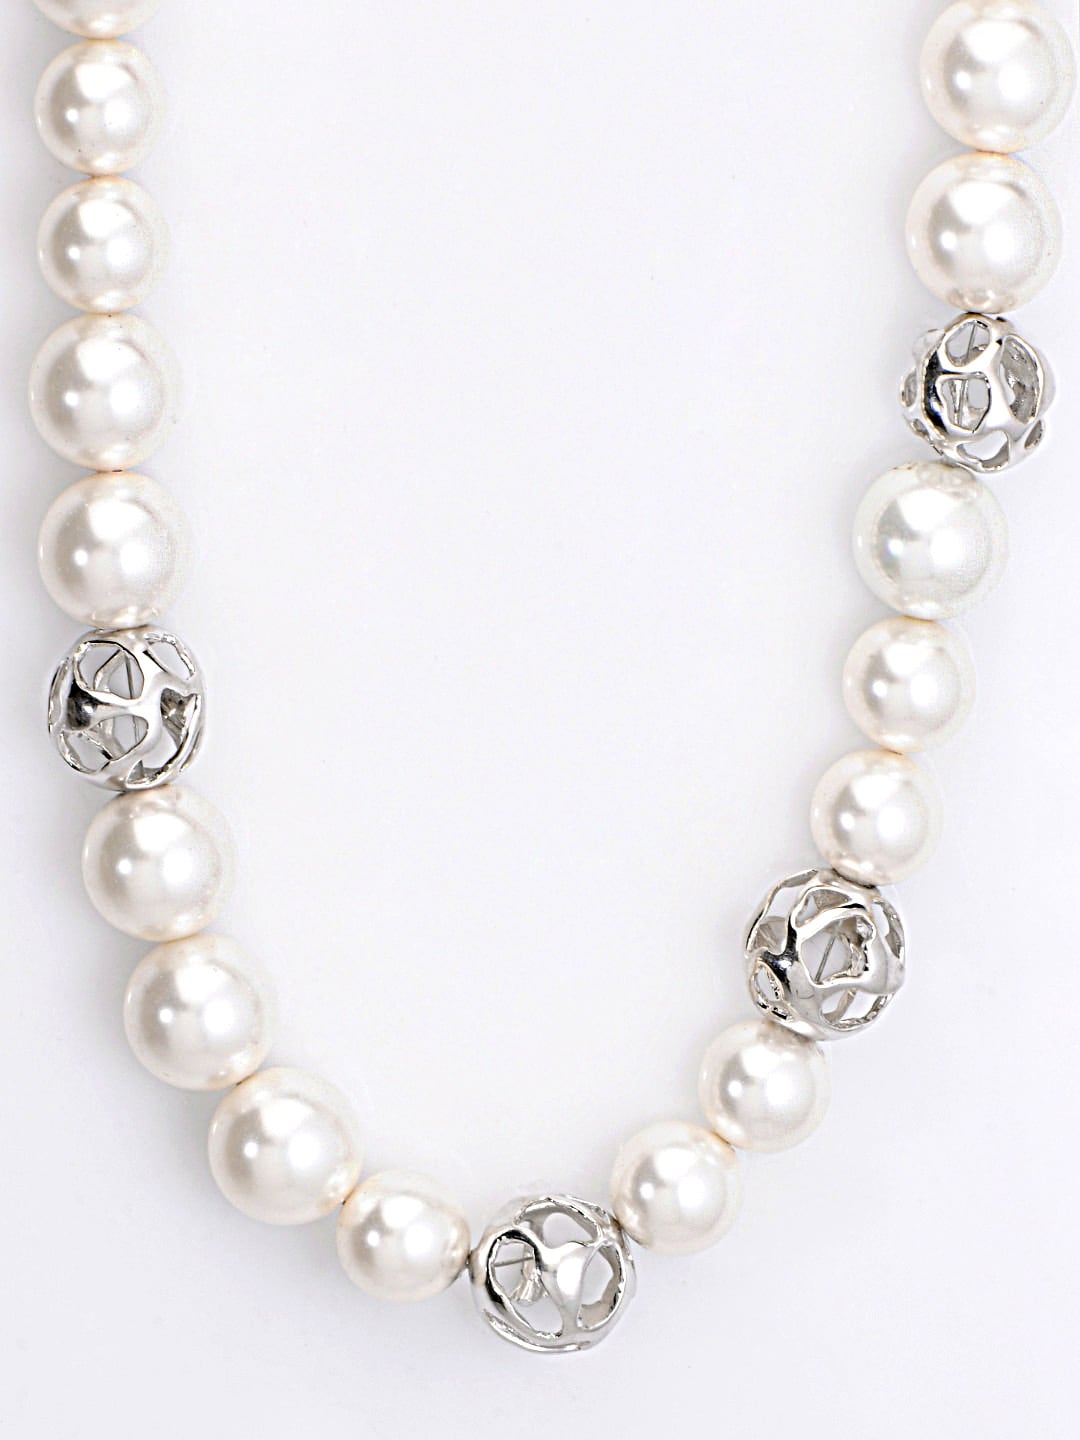 Lencia White Swarovski Pearl Necklace